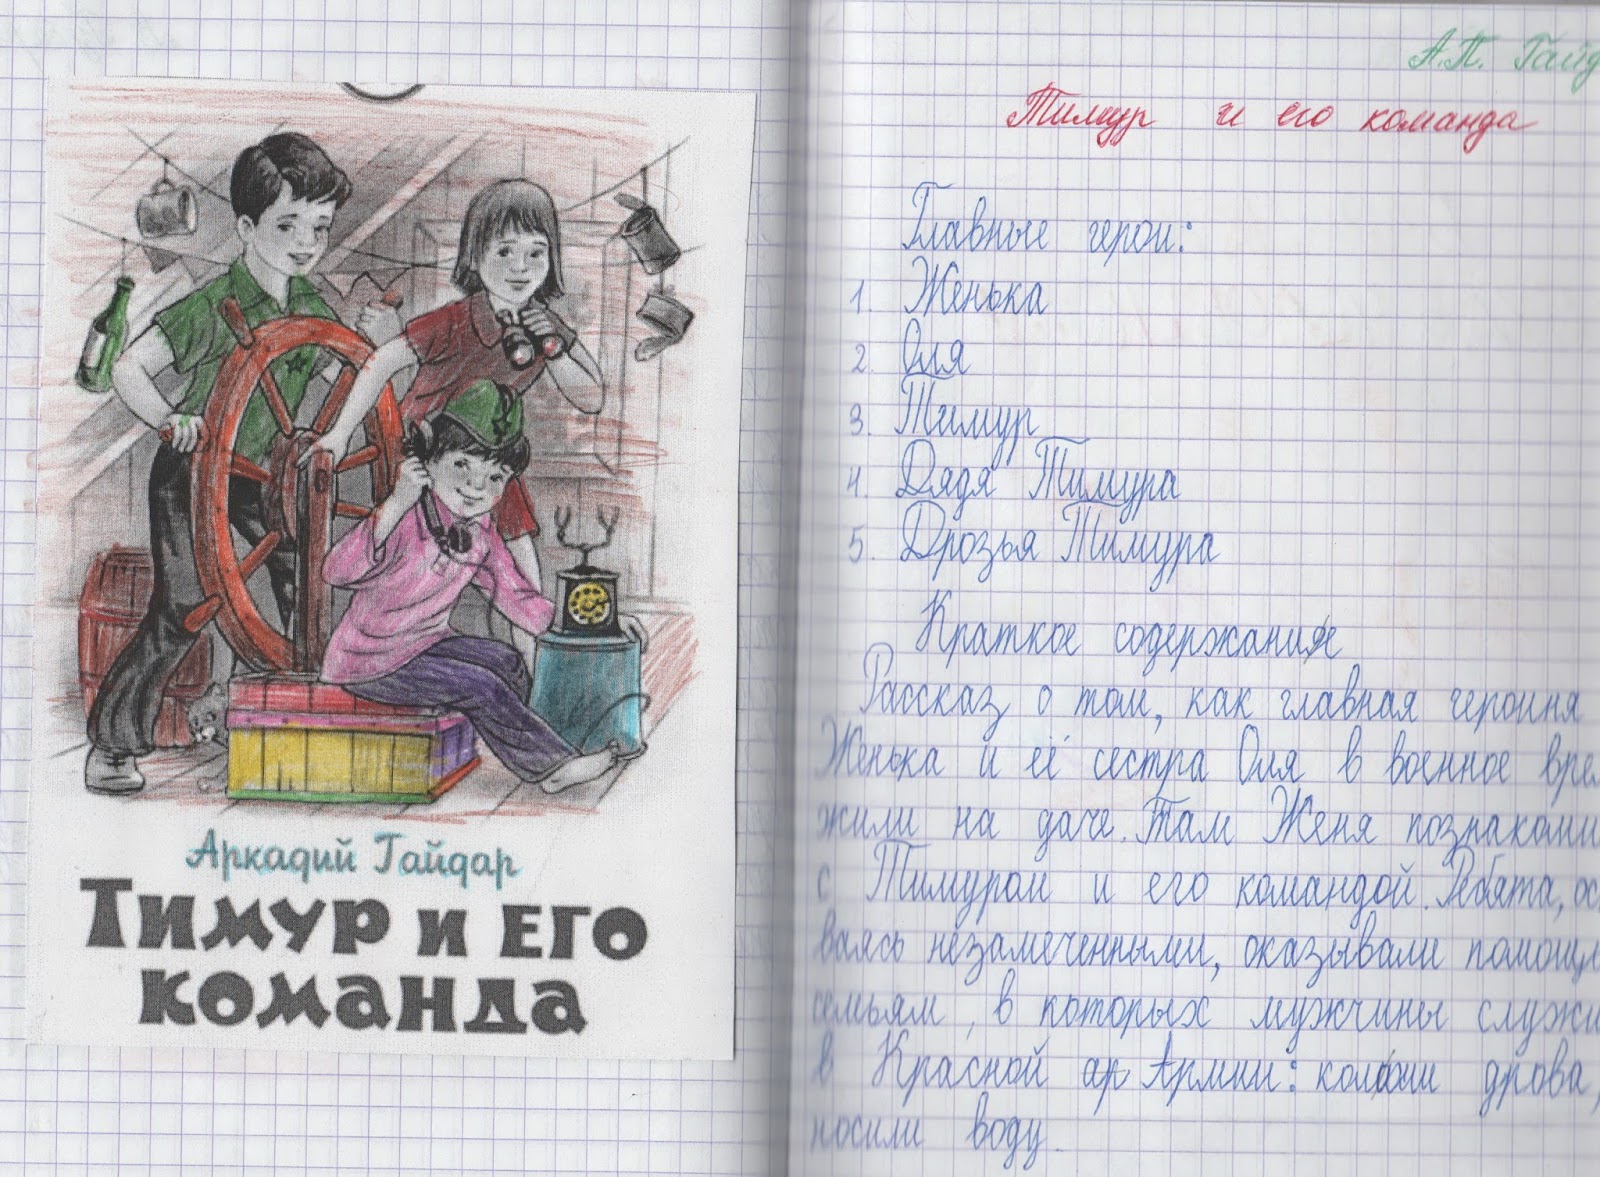 Гайдар Тимур и его команда читательский дневник